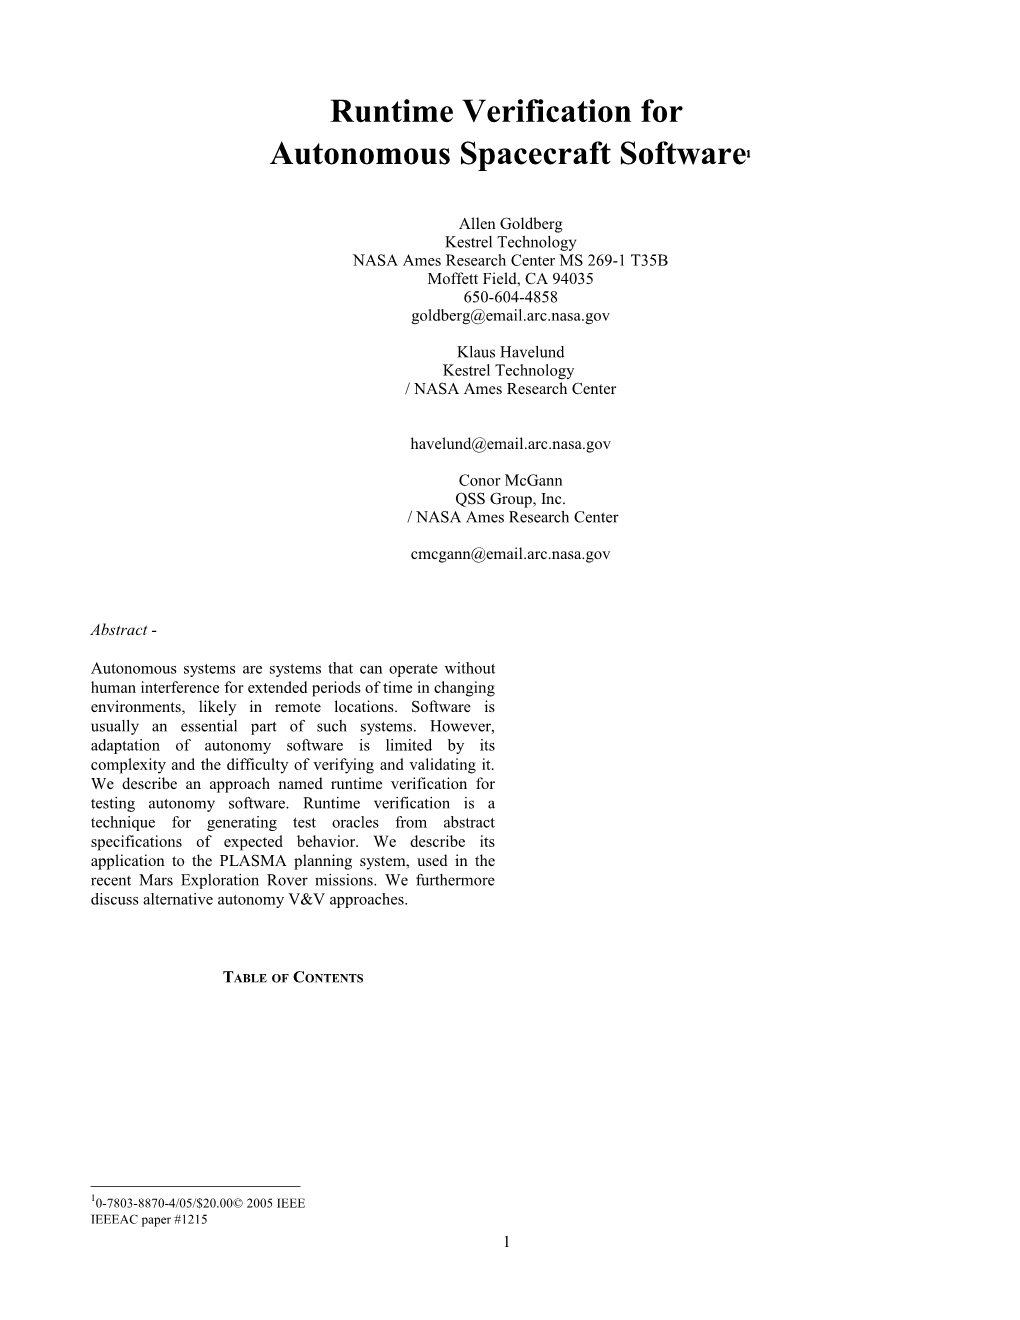 Runtime Verification for Autonomous Spacecraft Software